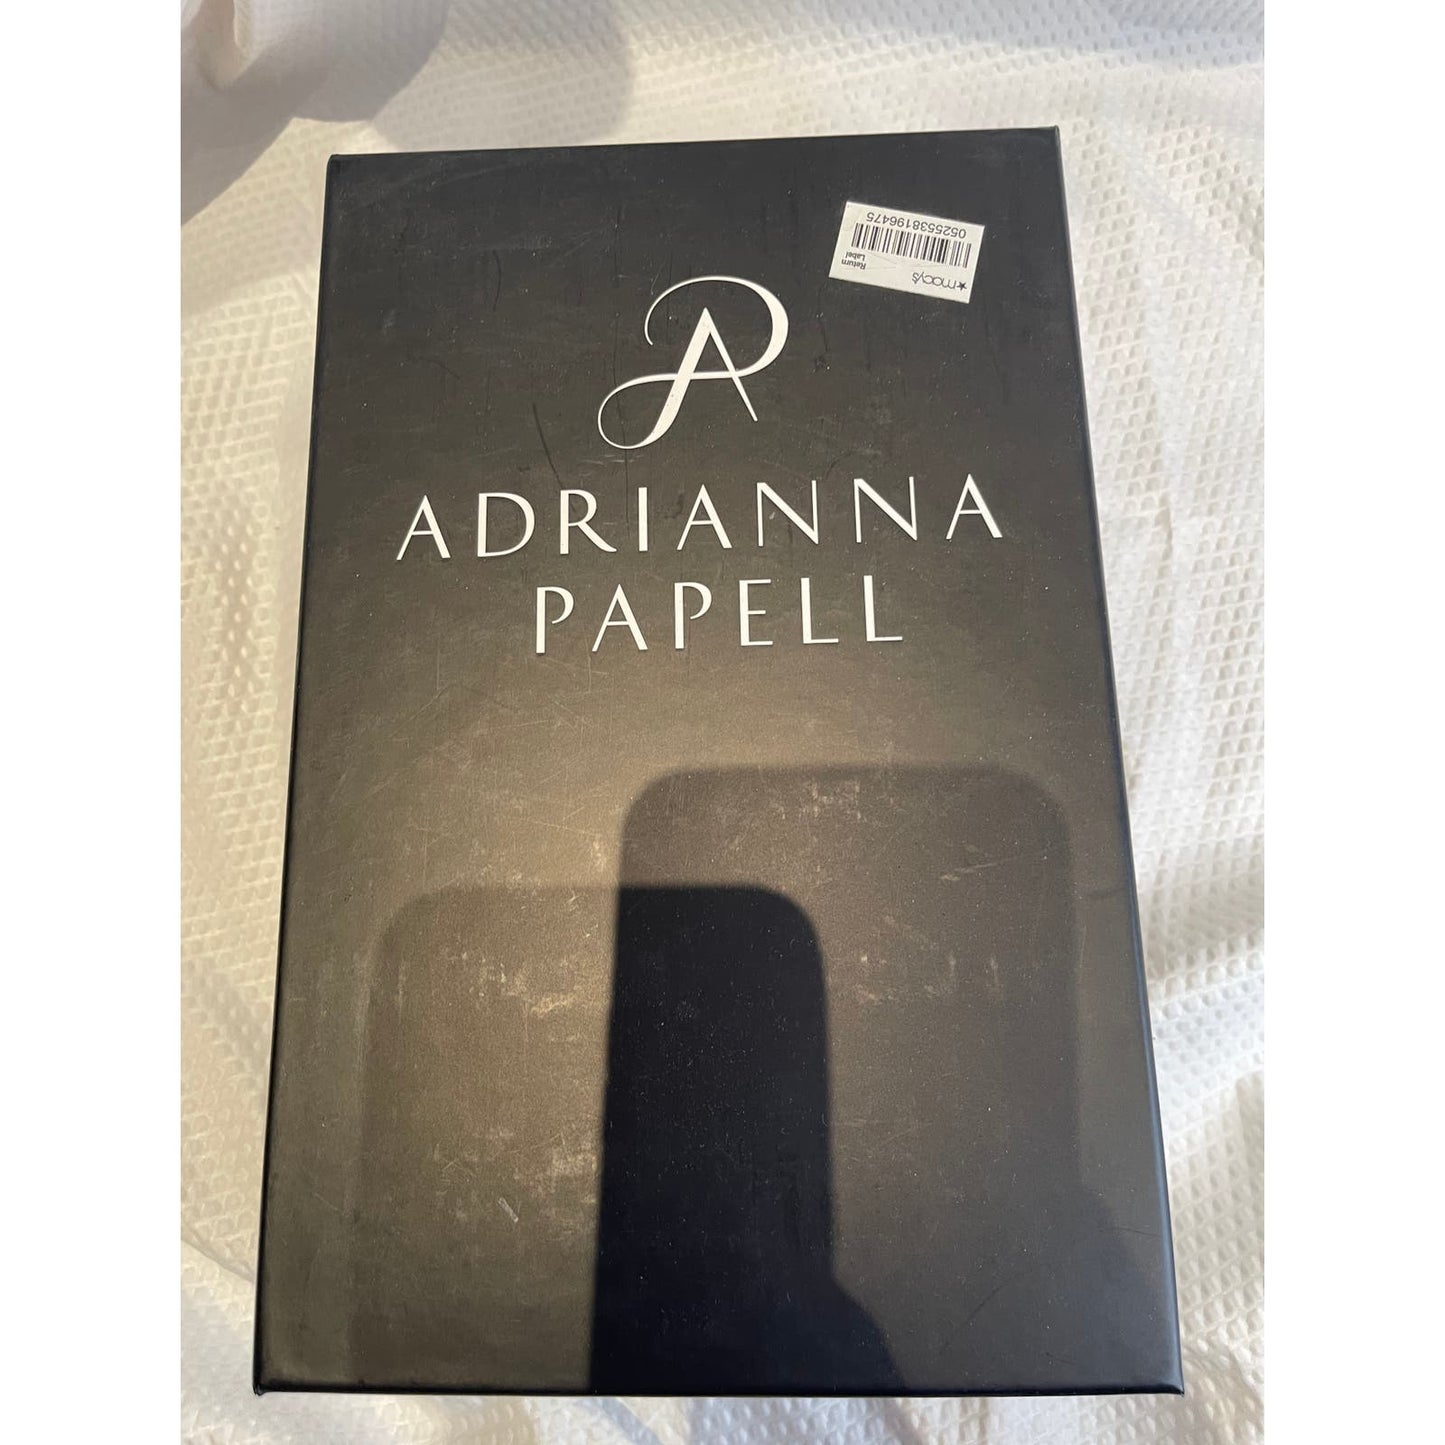 Adrianna Papell Women's Size 6.5 Black Heels - With Original Box